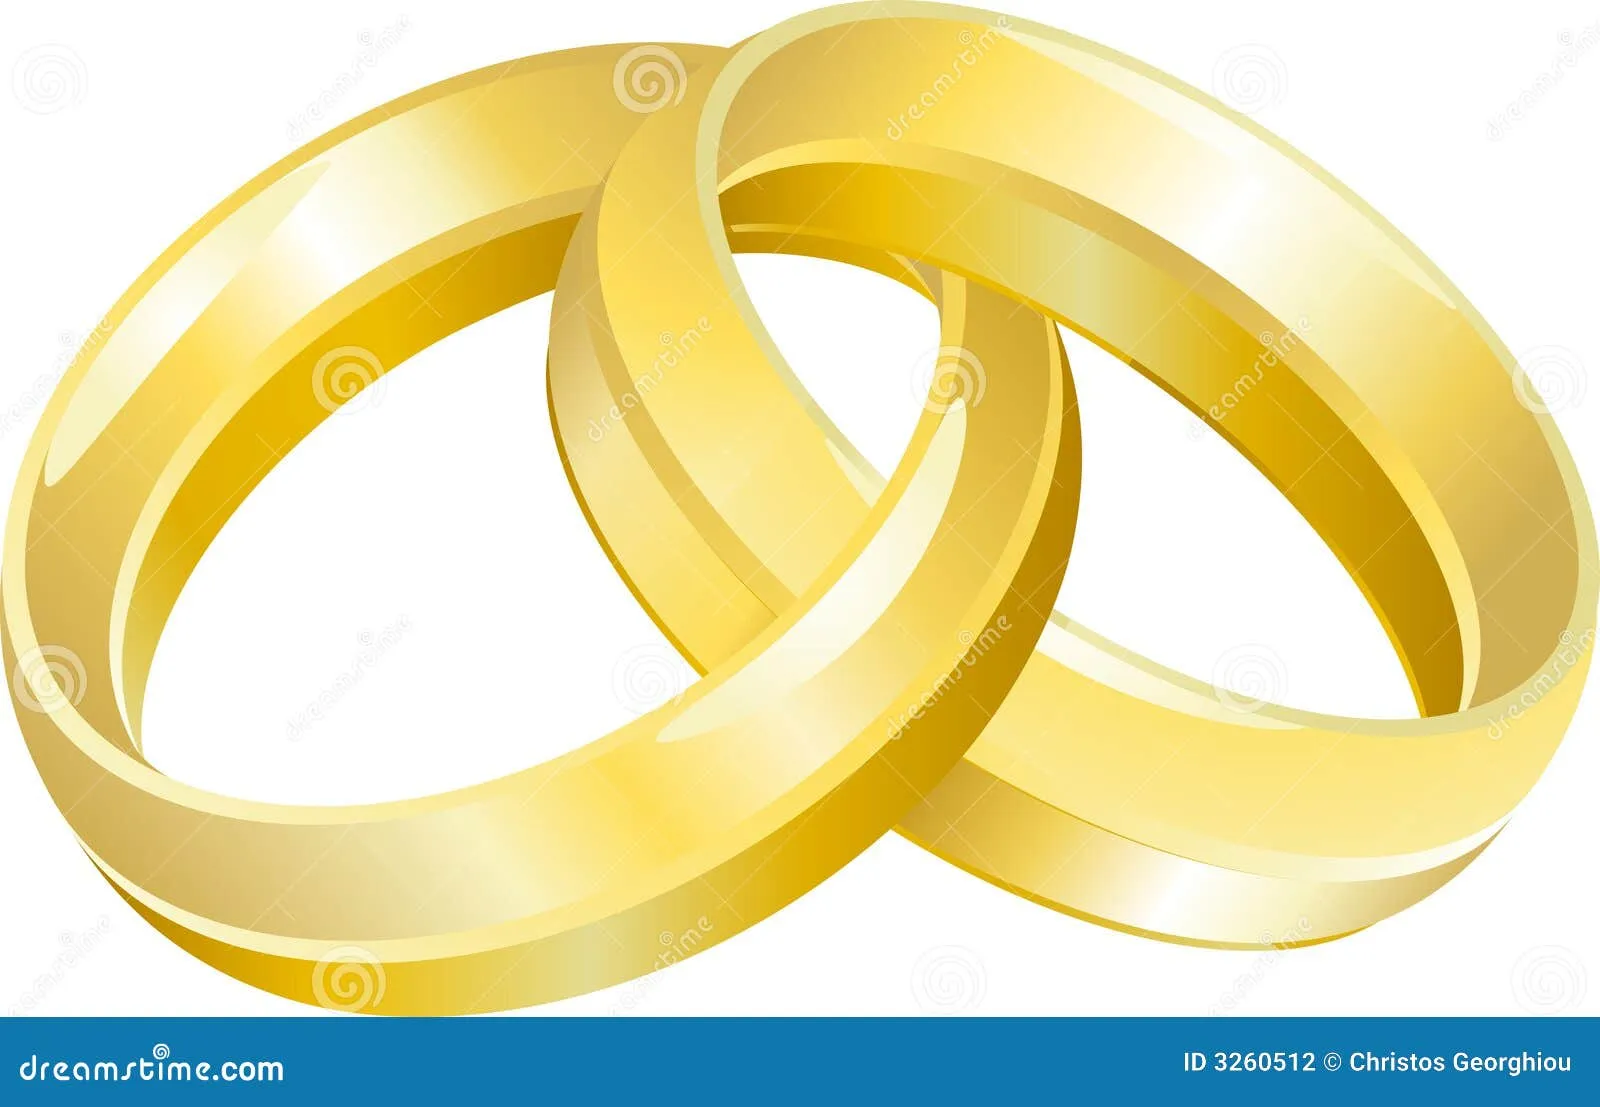 Imagenes de anillos de boda entrelazados - Imagui